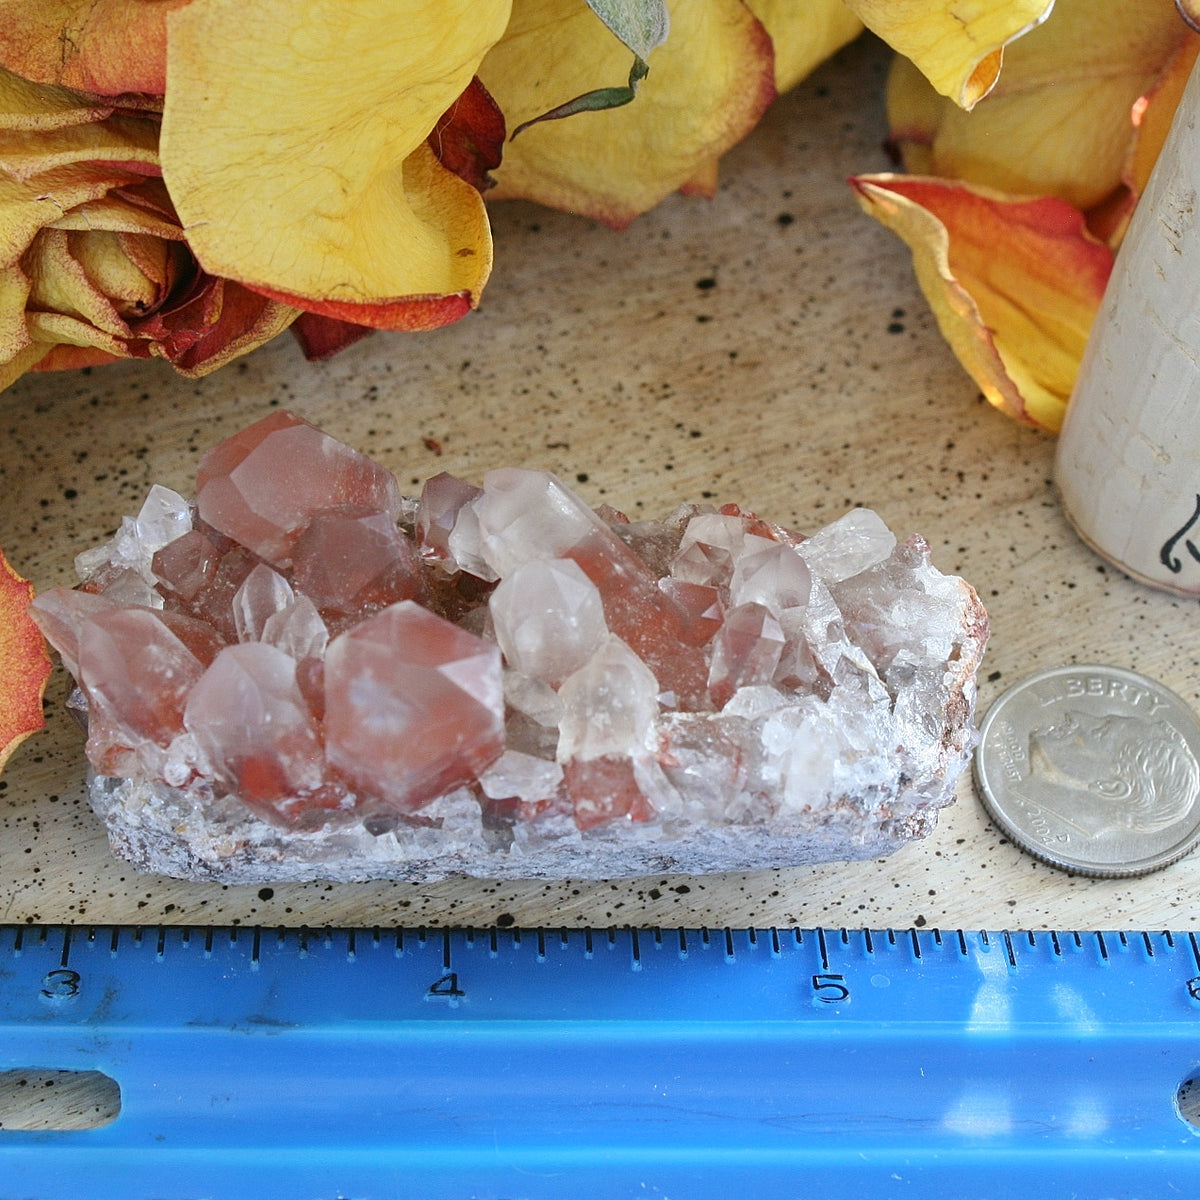 Orange River Quartz with Hematite Inclusions / Phantoms, Northern Cape, South Africa, 74.7 grams